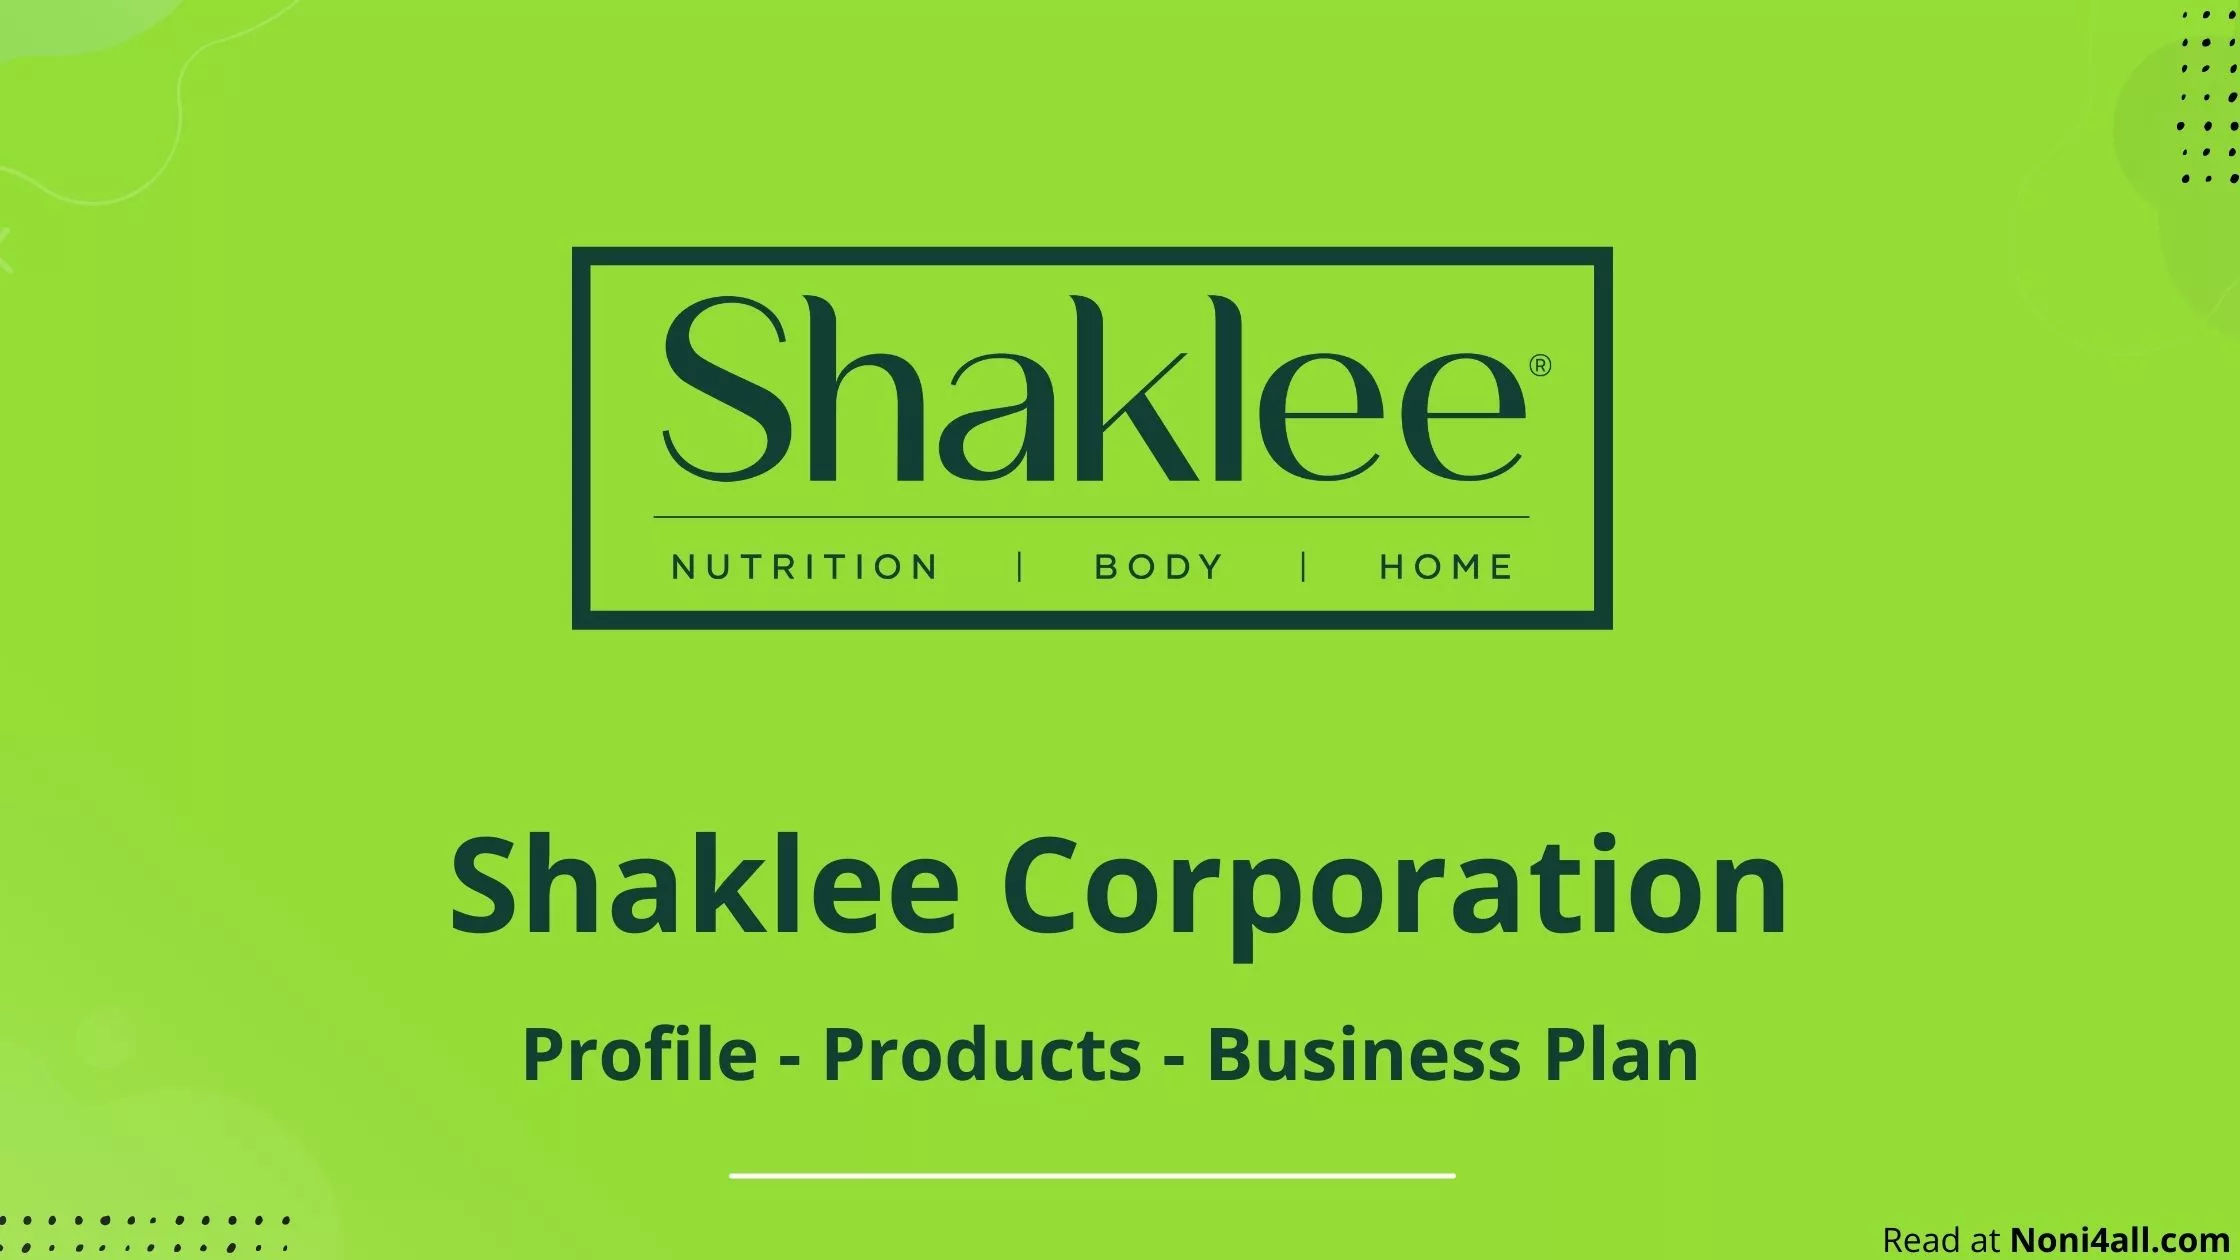 Shaklee website